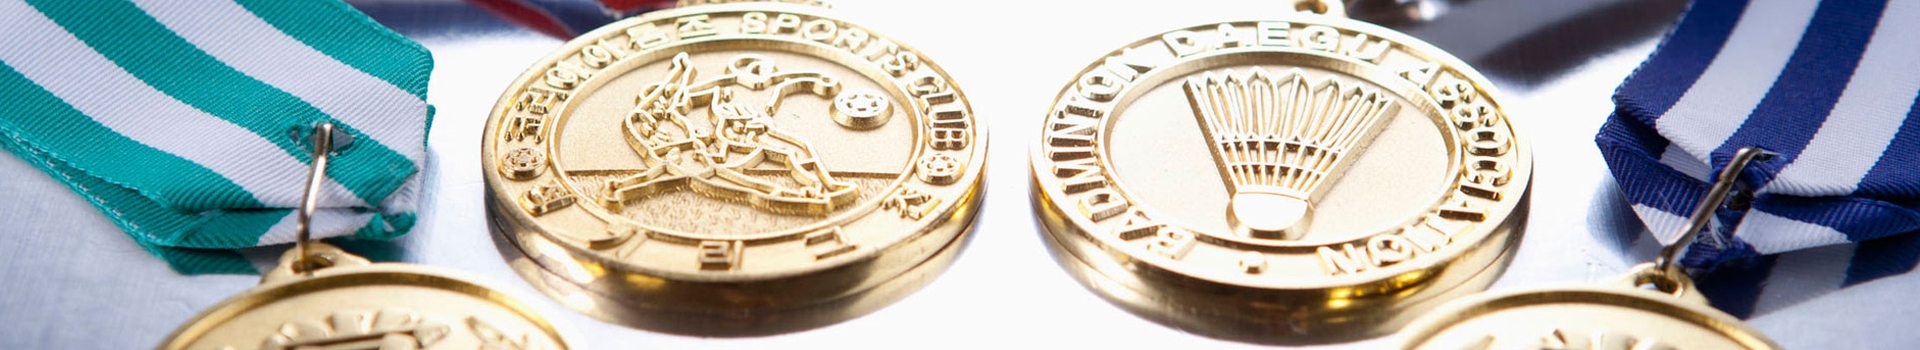 Custom Design Gold Plated 3D Sports Medal